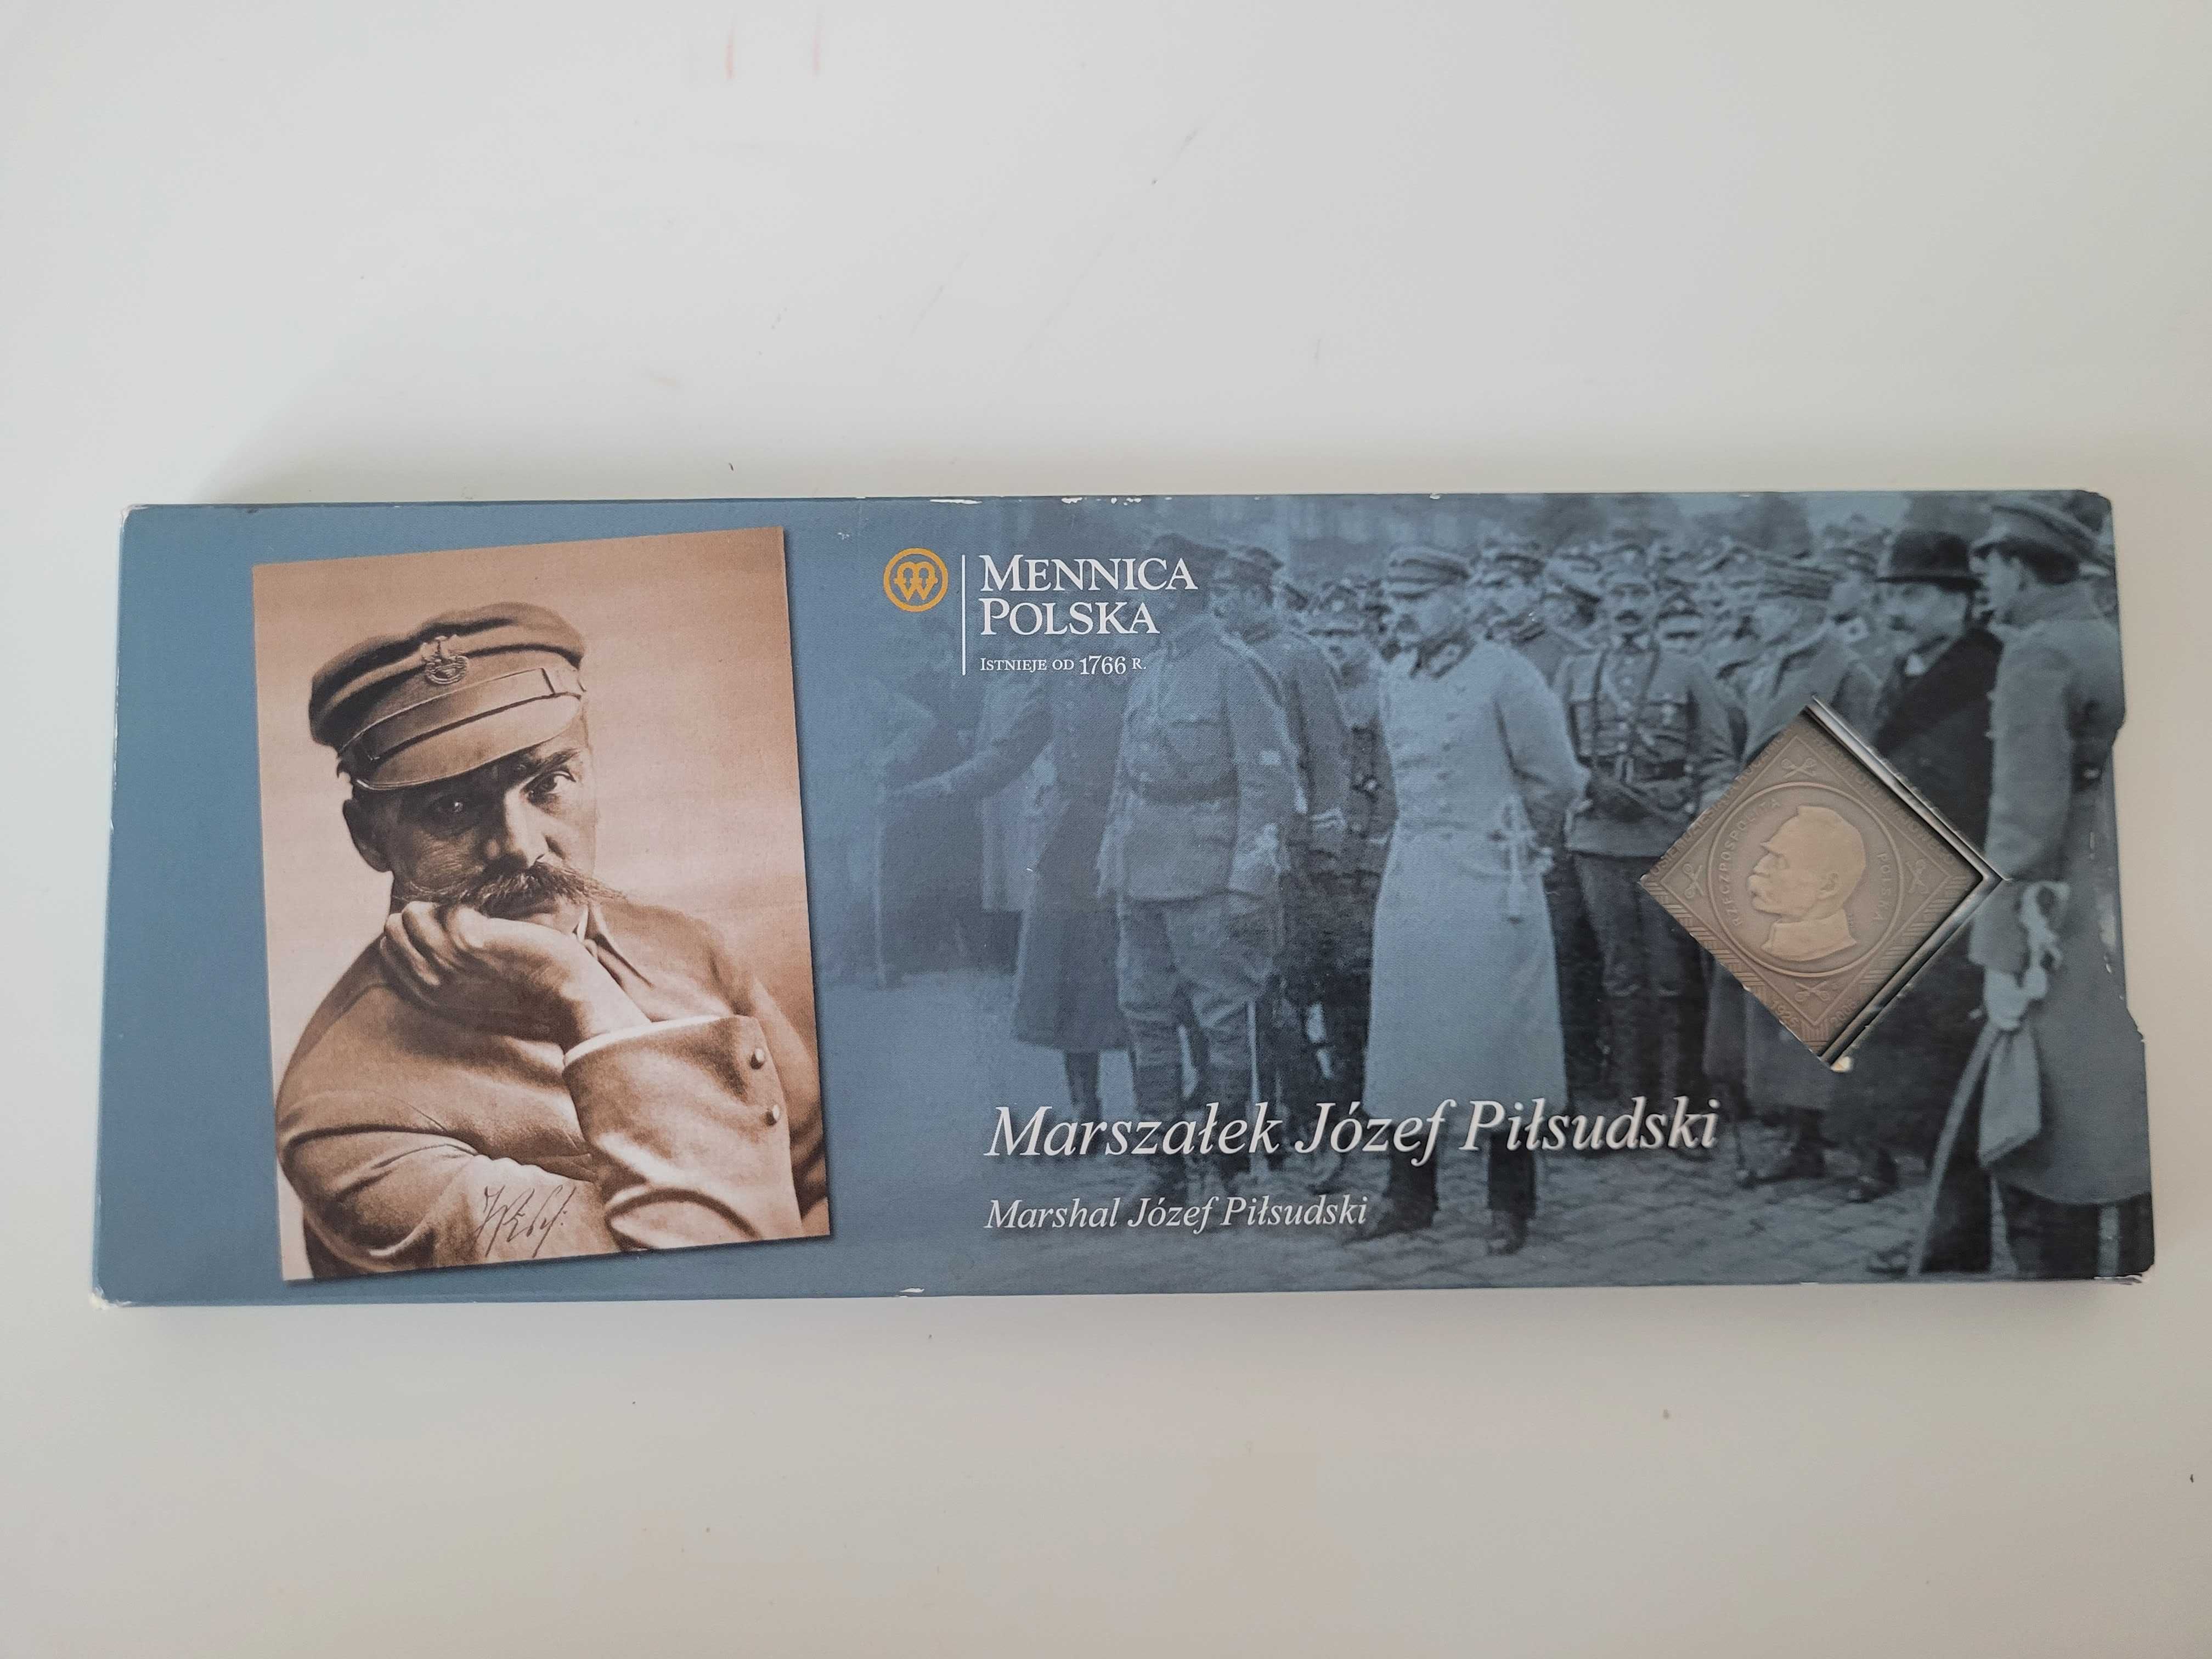 Piłsudski 5 milionów-piękny RADAR AA000565 +klipa+medal_UNC